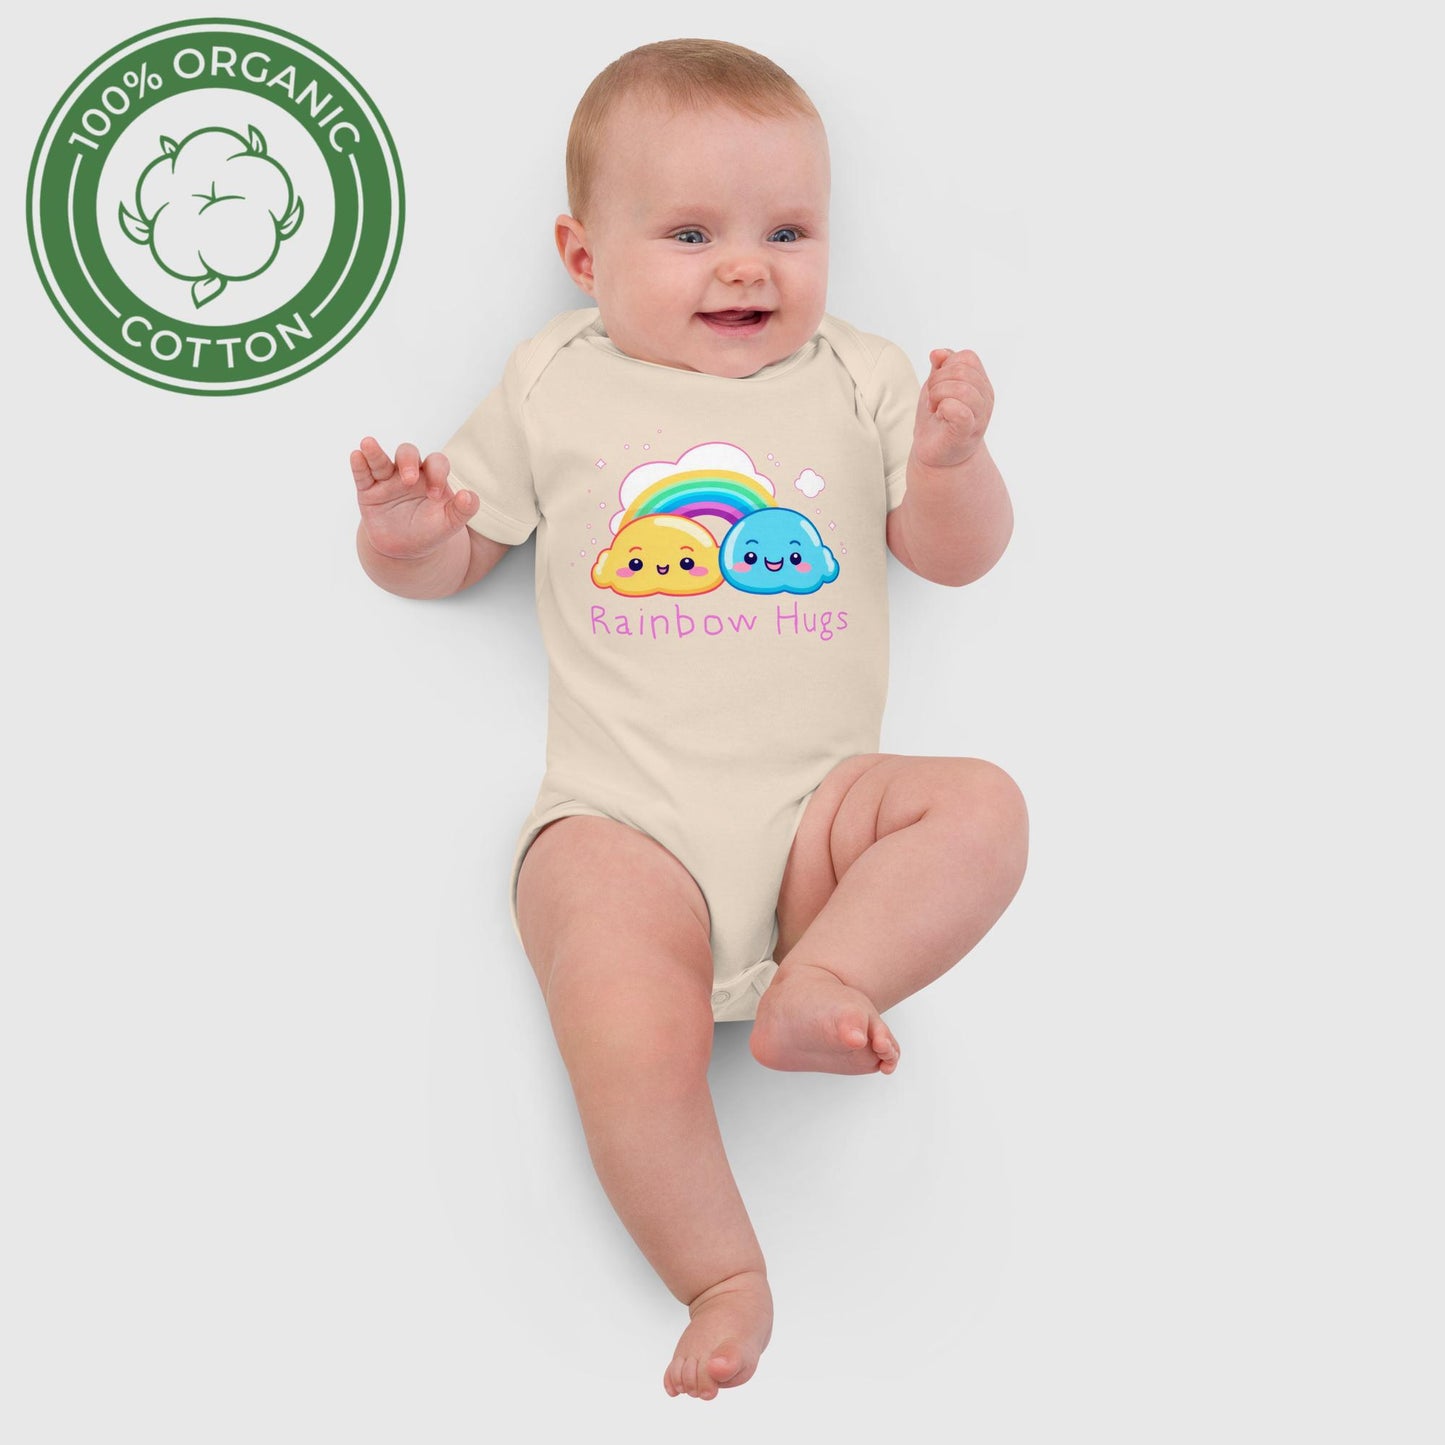 Rainbow Hugs Organic cotton baby bodysuit